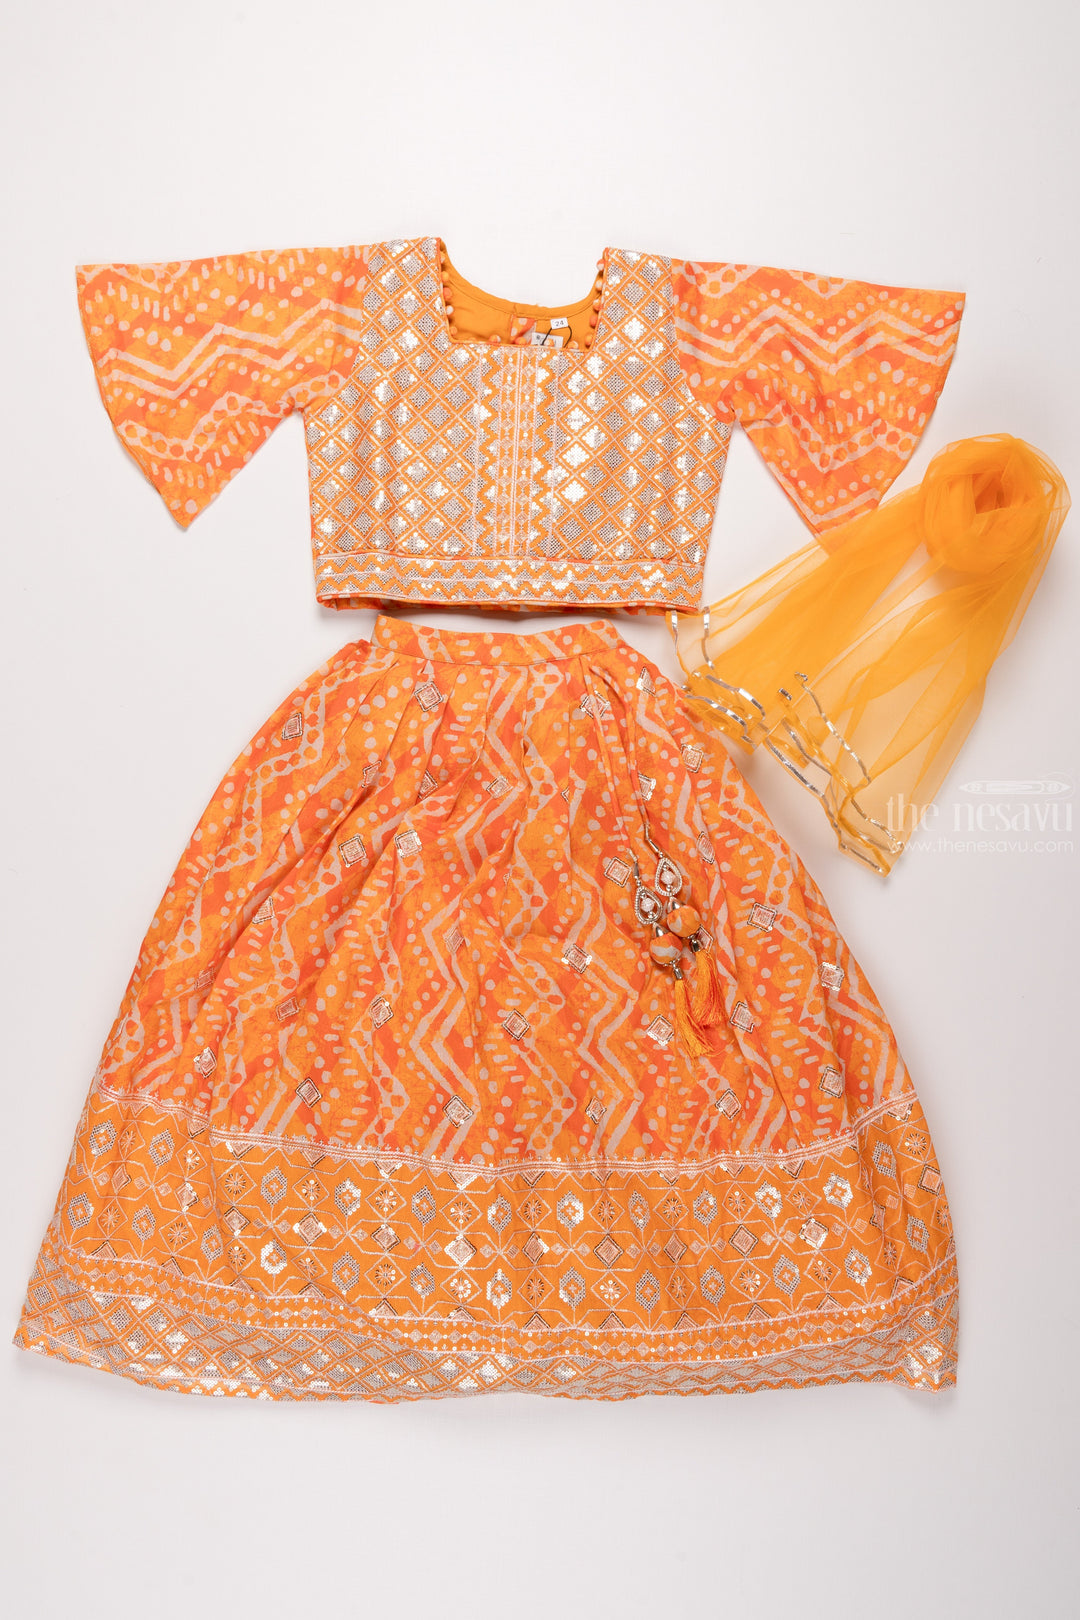 The Nesavu Girls Lehenga Choli Golden Radiance: Exquisite Patterned Orange Lehenga Choli for Girls Nesavu Diwali Princess | Traditional Lehenga Choli Sets for Girls | The Nesavu